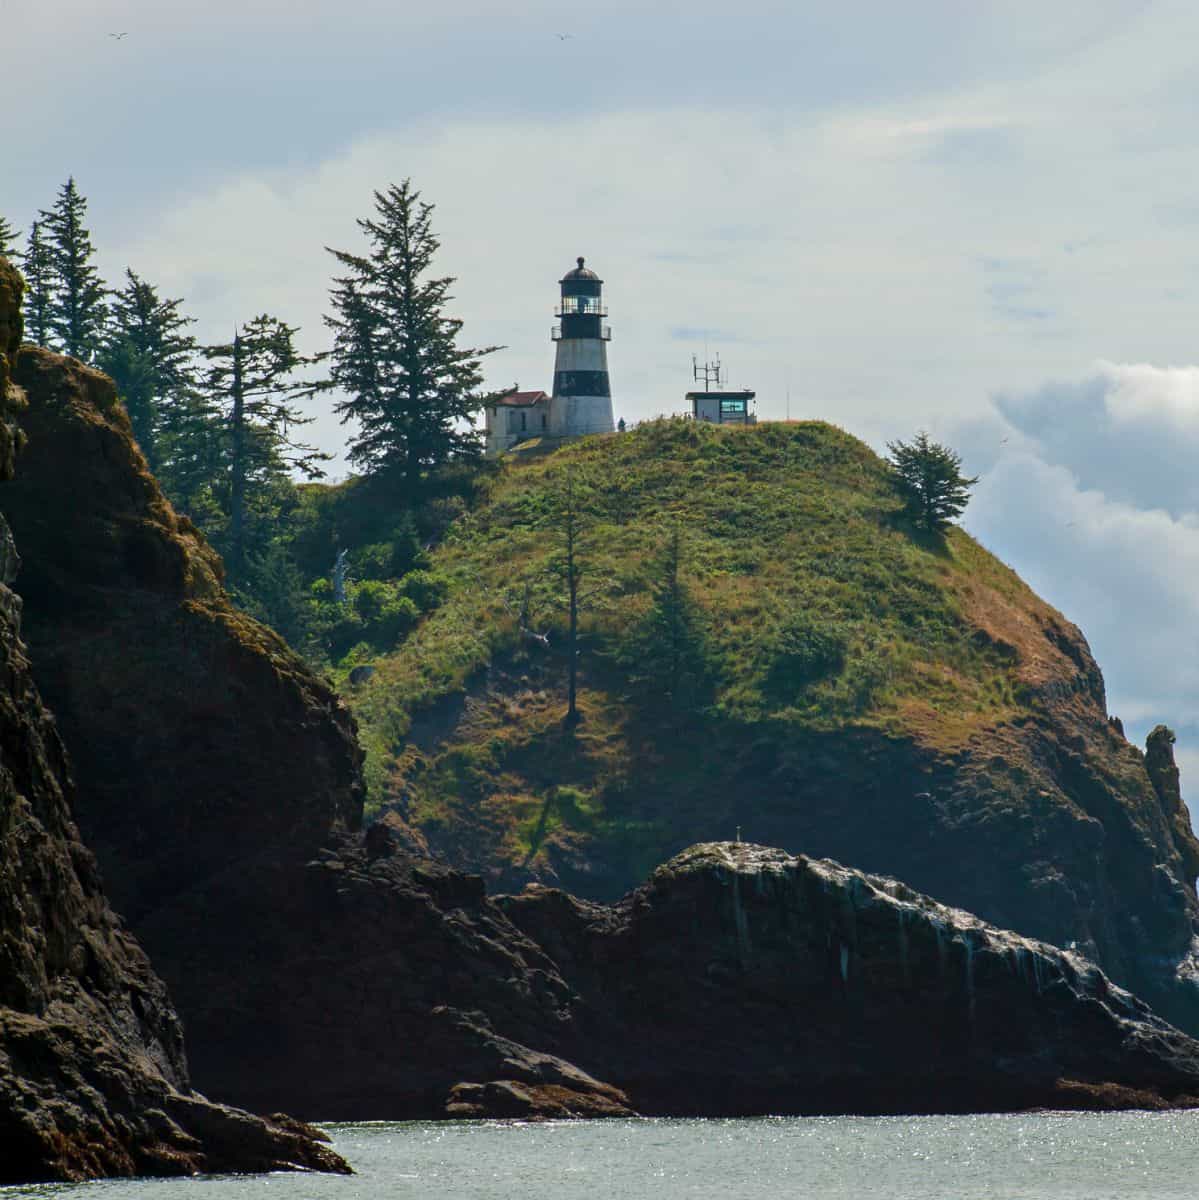 Lighthouse on a rocky point on the ocean